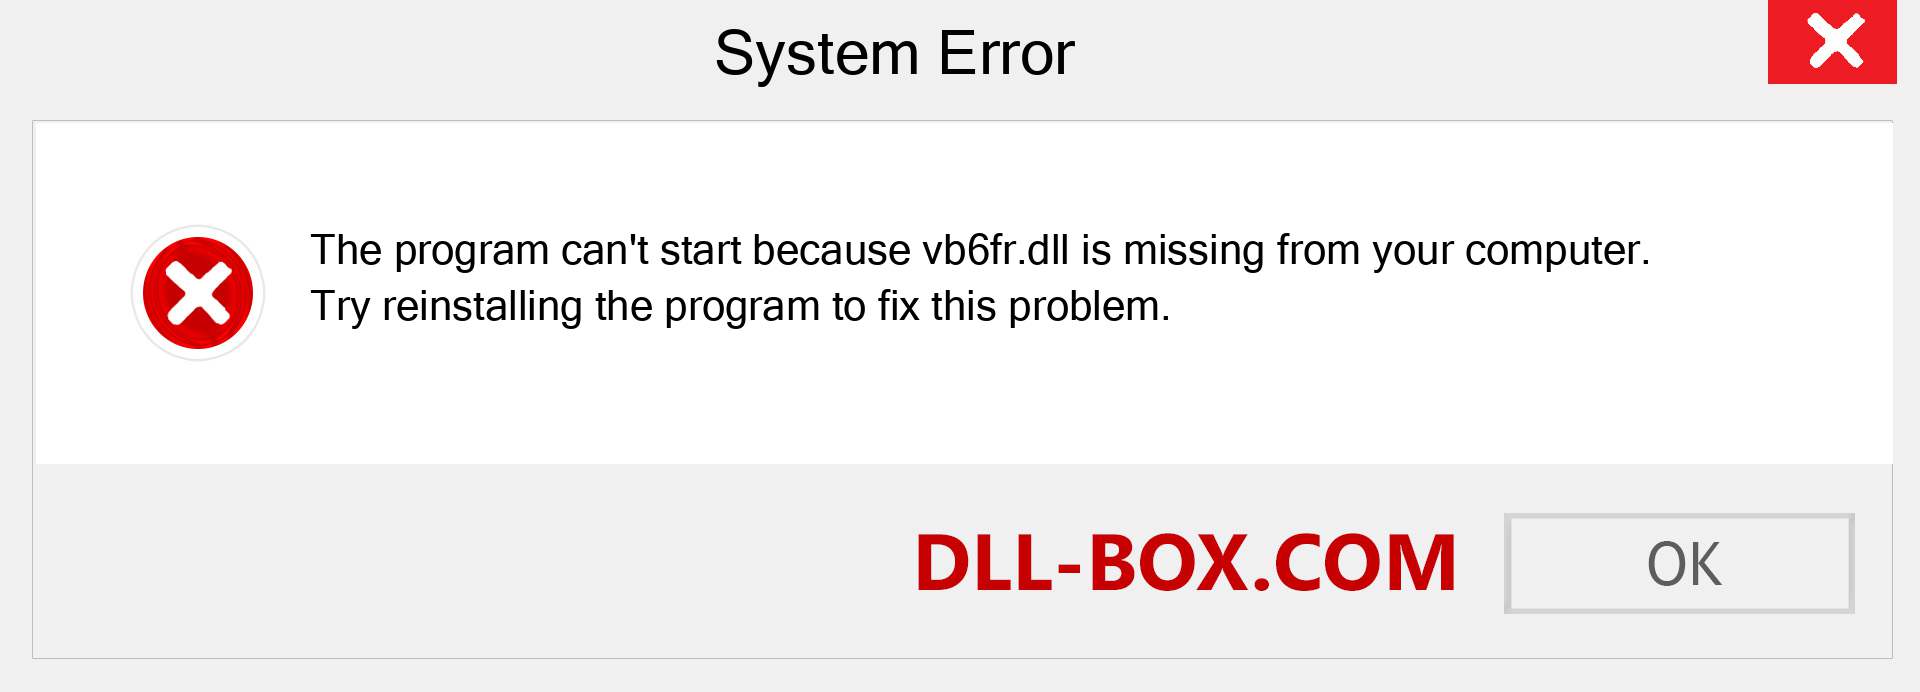  vb6fr.dll file is missing?. Download for Windows 7, 8, 10 - Fix  vb6fr dll Missing Error on Windows, photos, images